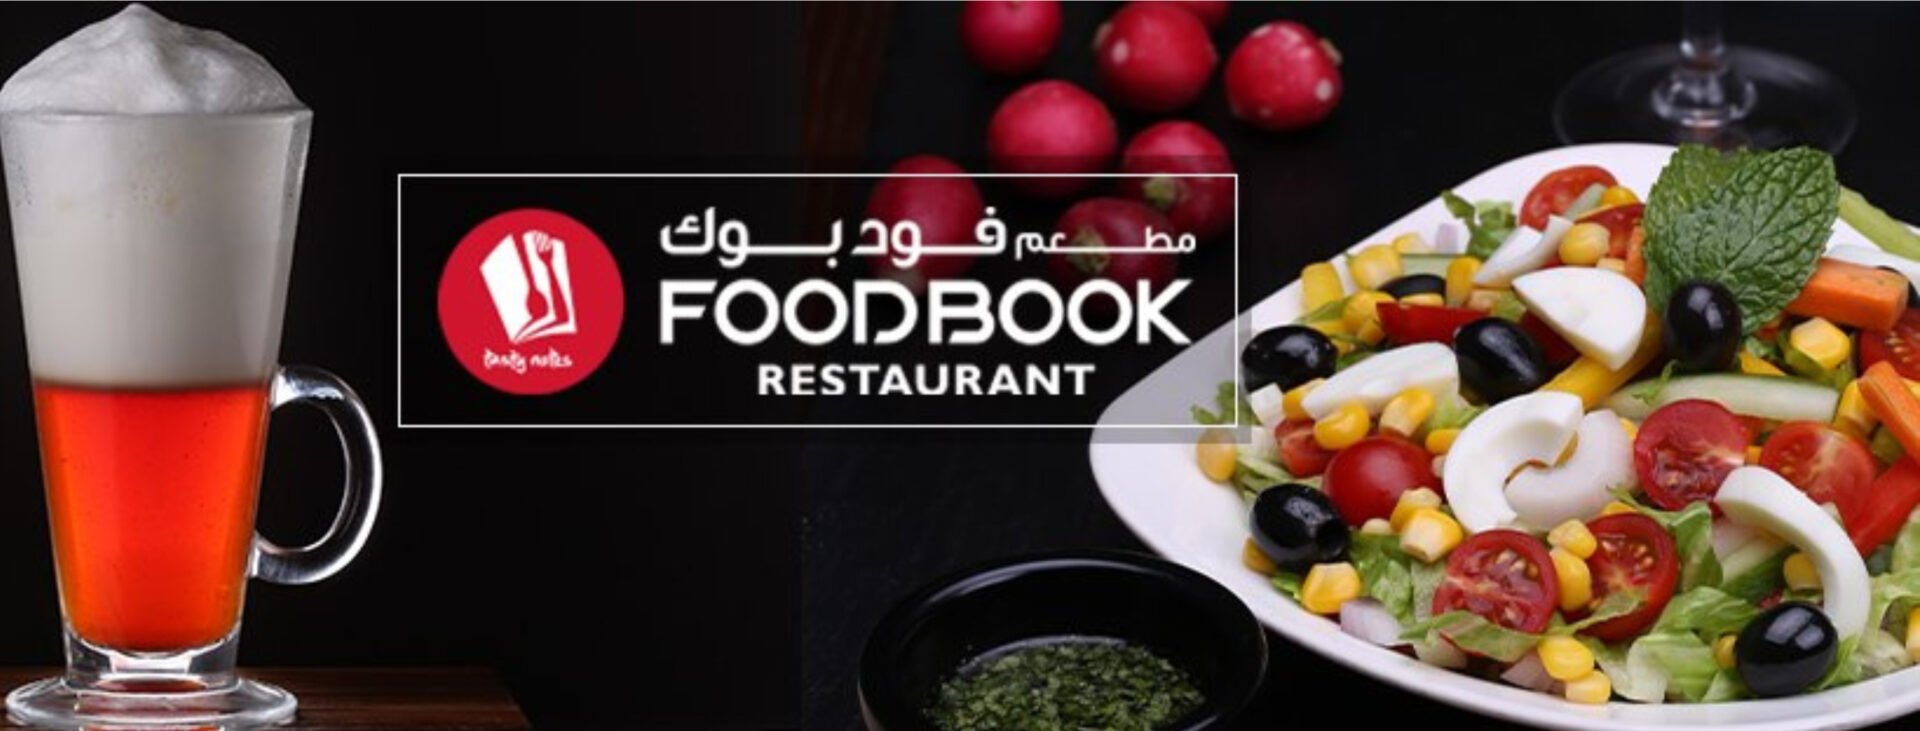 Foodbook Restaurant Ajman